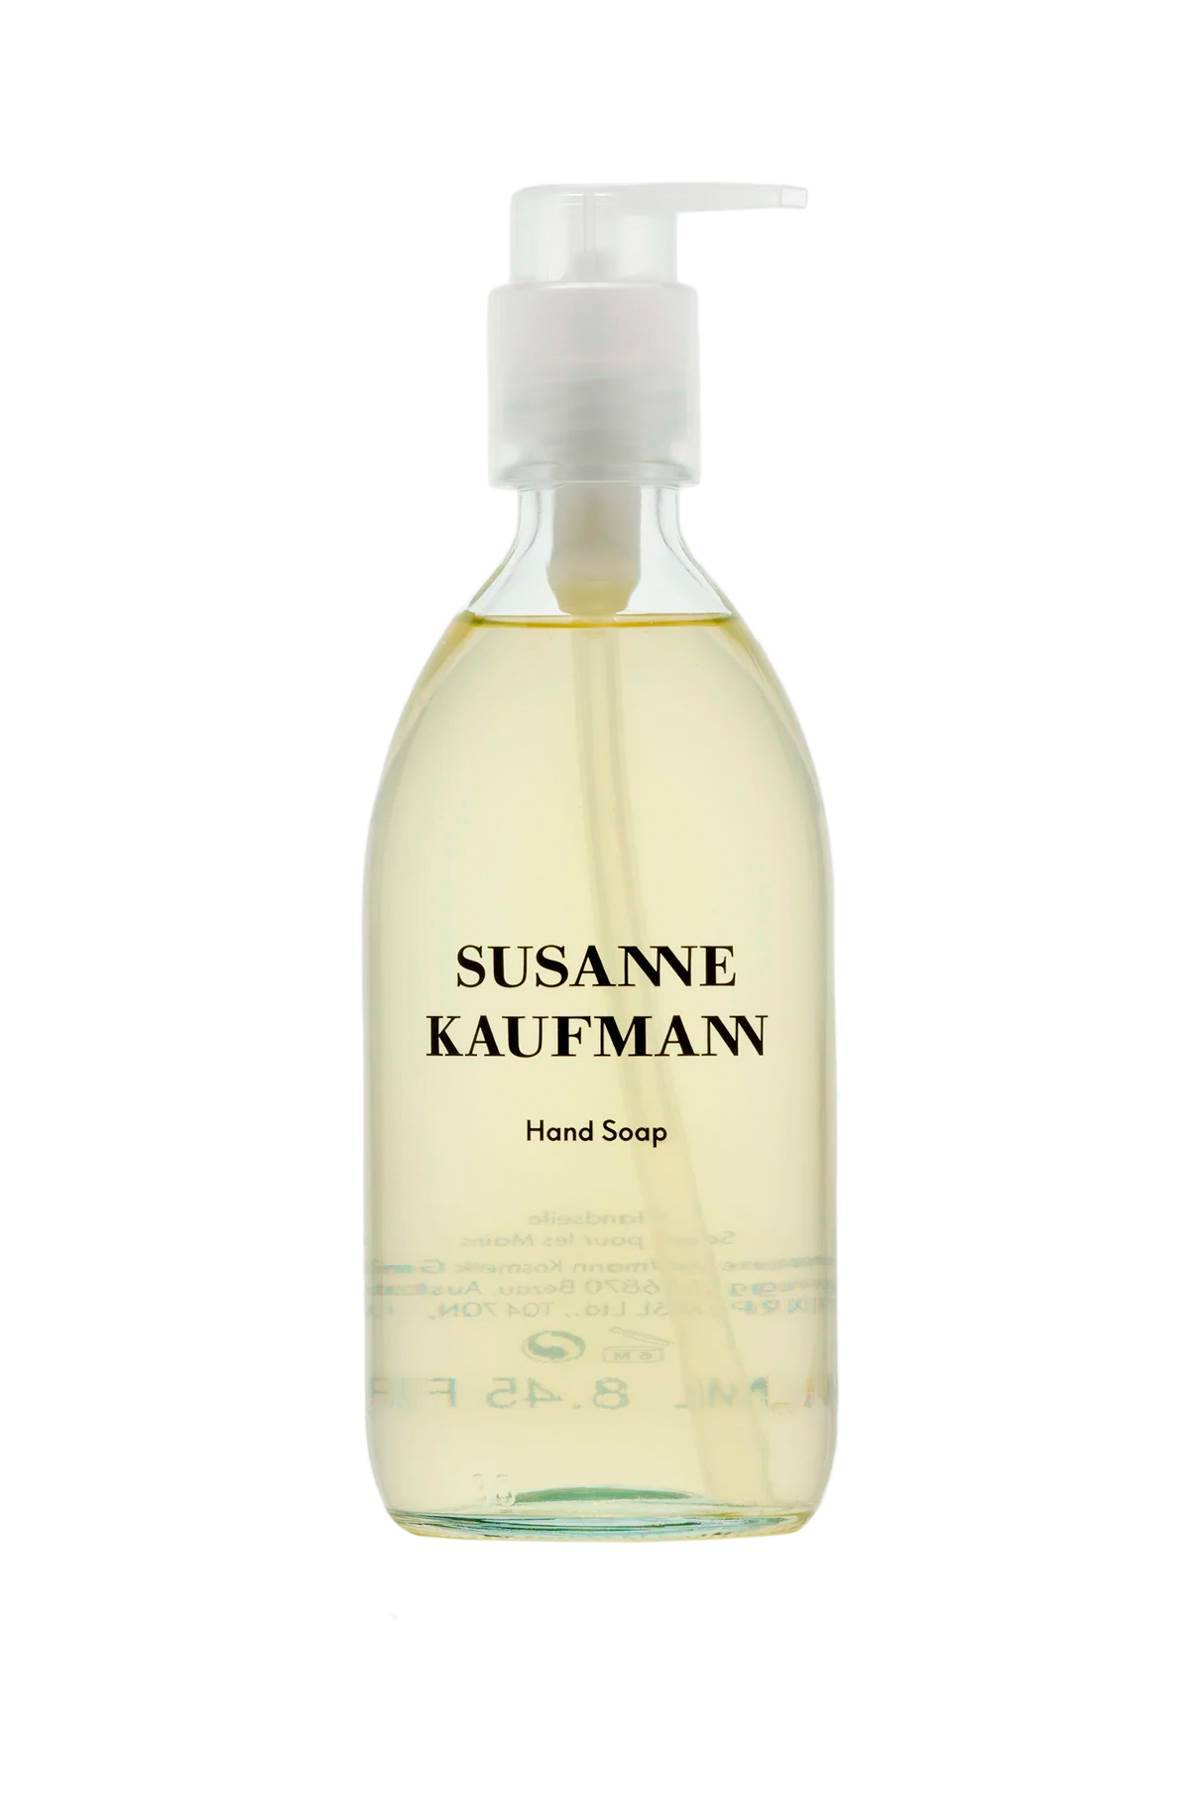 Susanne Kaufmann SUSANNE KAUFMANN hand soap - 250 ml